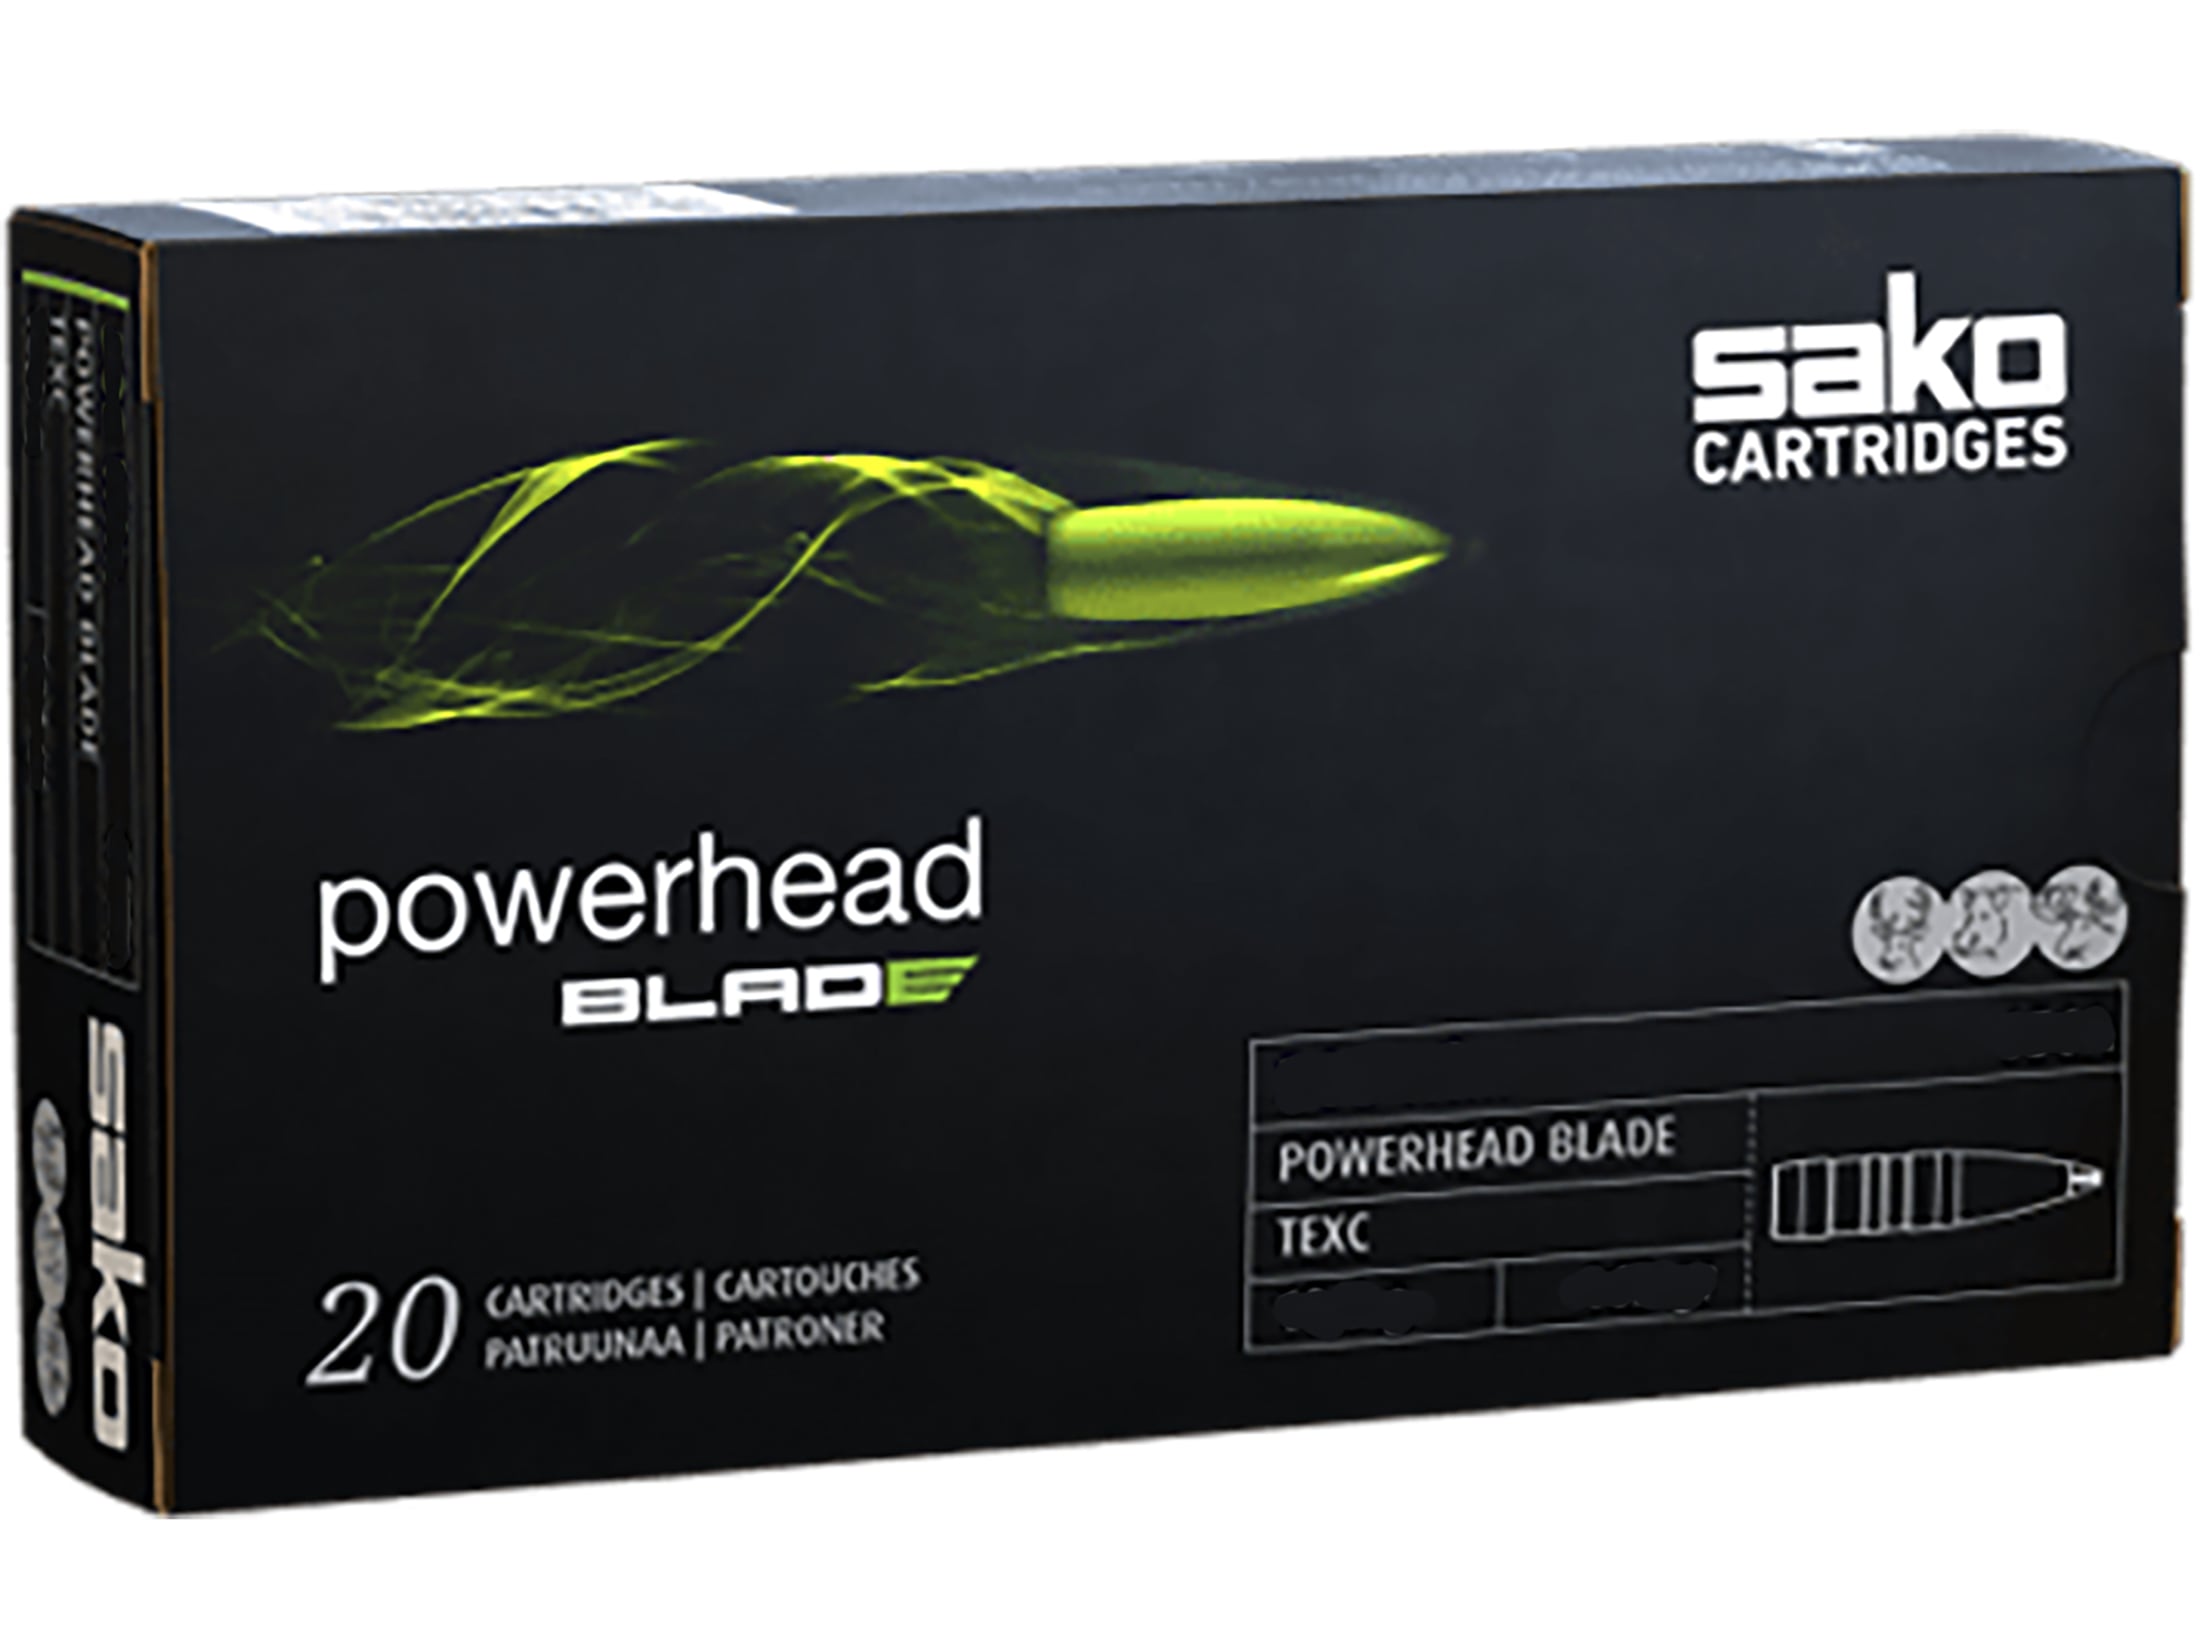 Sako Powerhead Blade Ammunition 6.5 Creedmoor 120 Grain Polymer Tip Lead Free